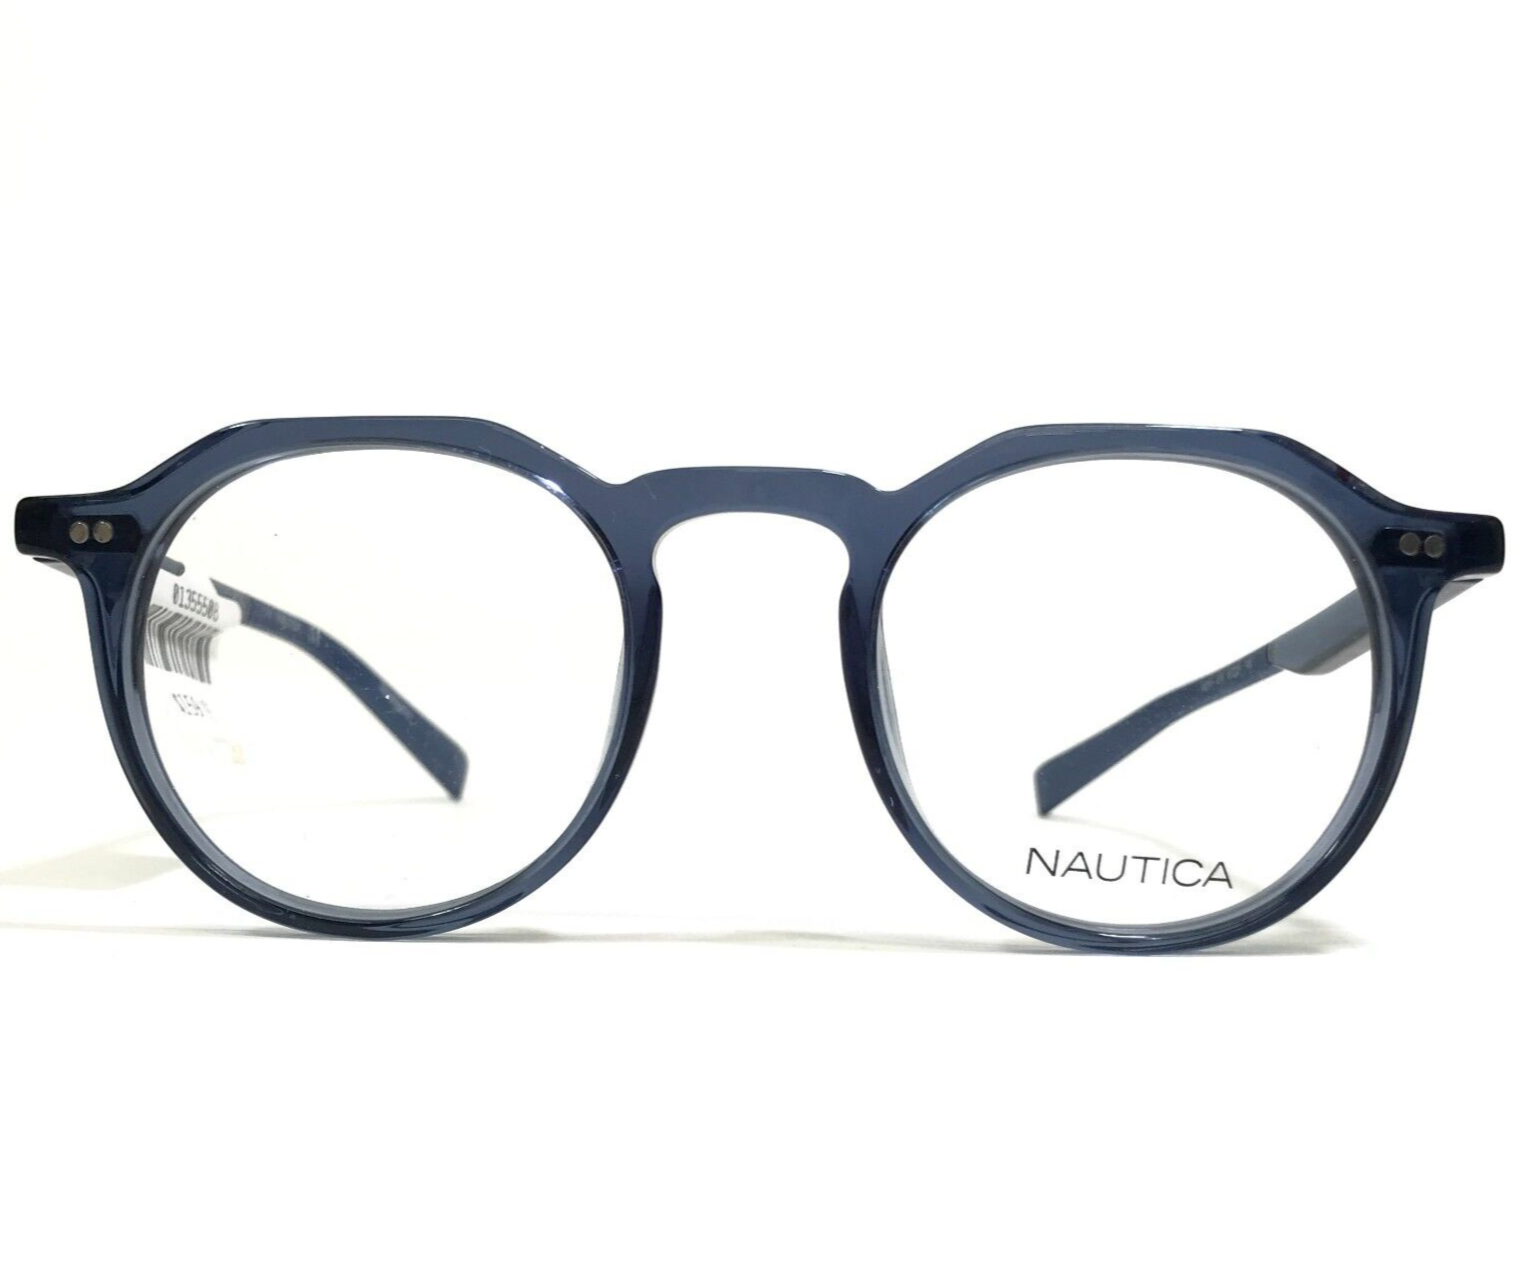 Nautica Eyeglasses Frames N8151 410 Clear Blue Hexagon Round Full Rim 47-21-140 - $111.98